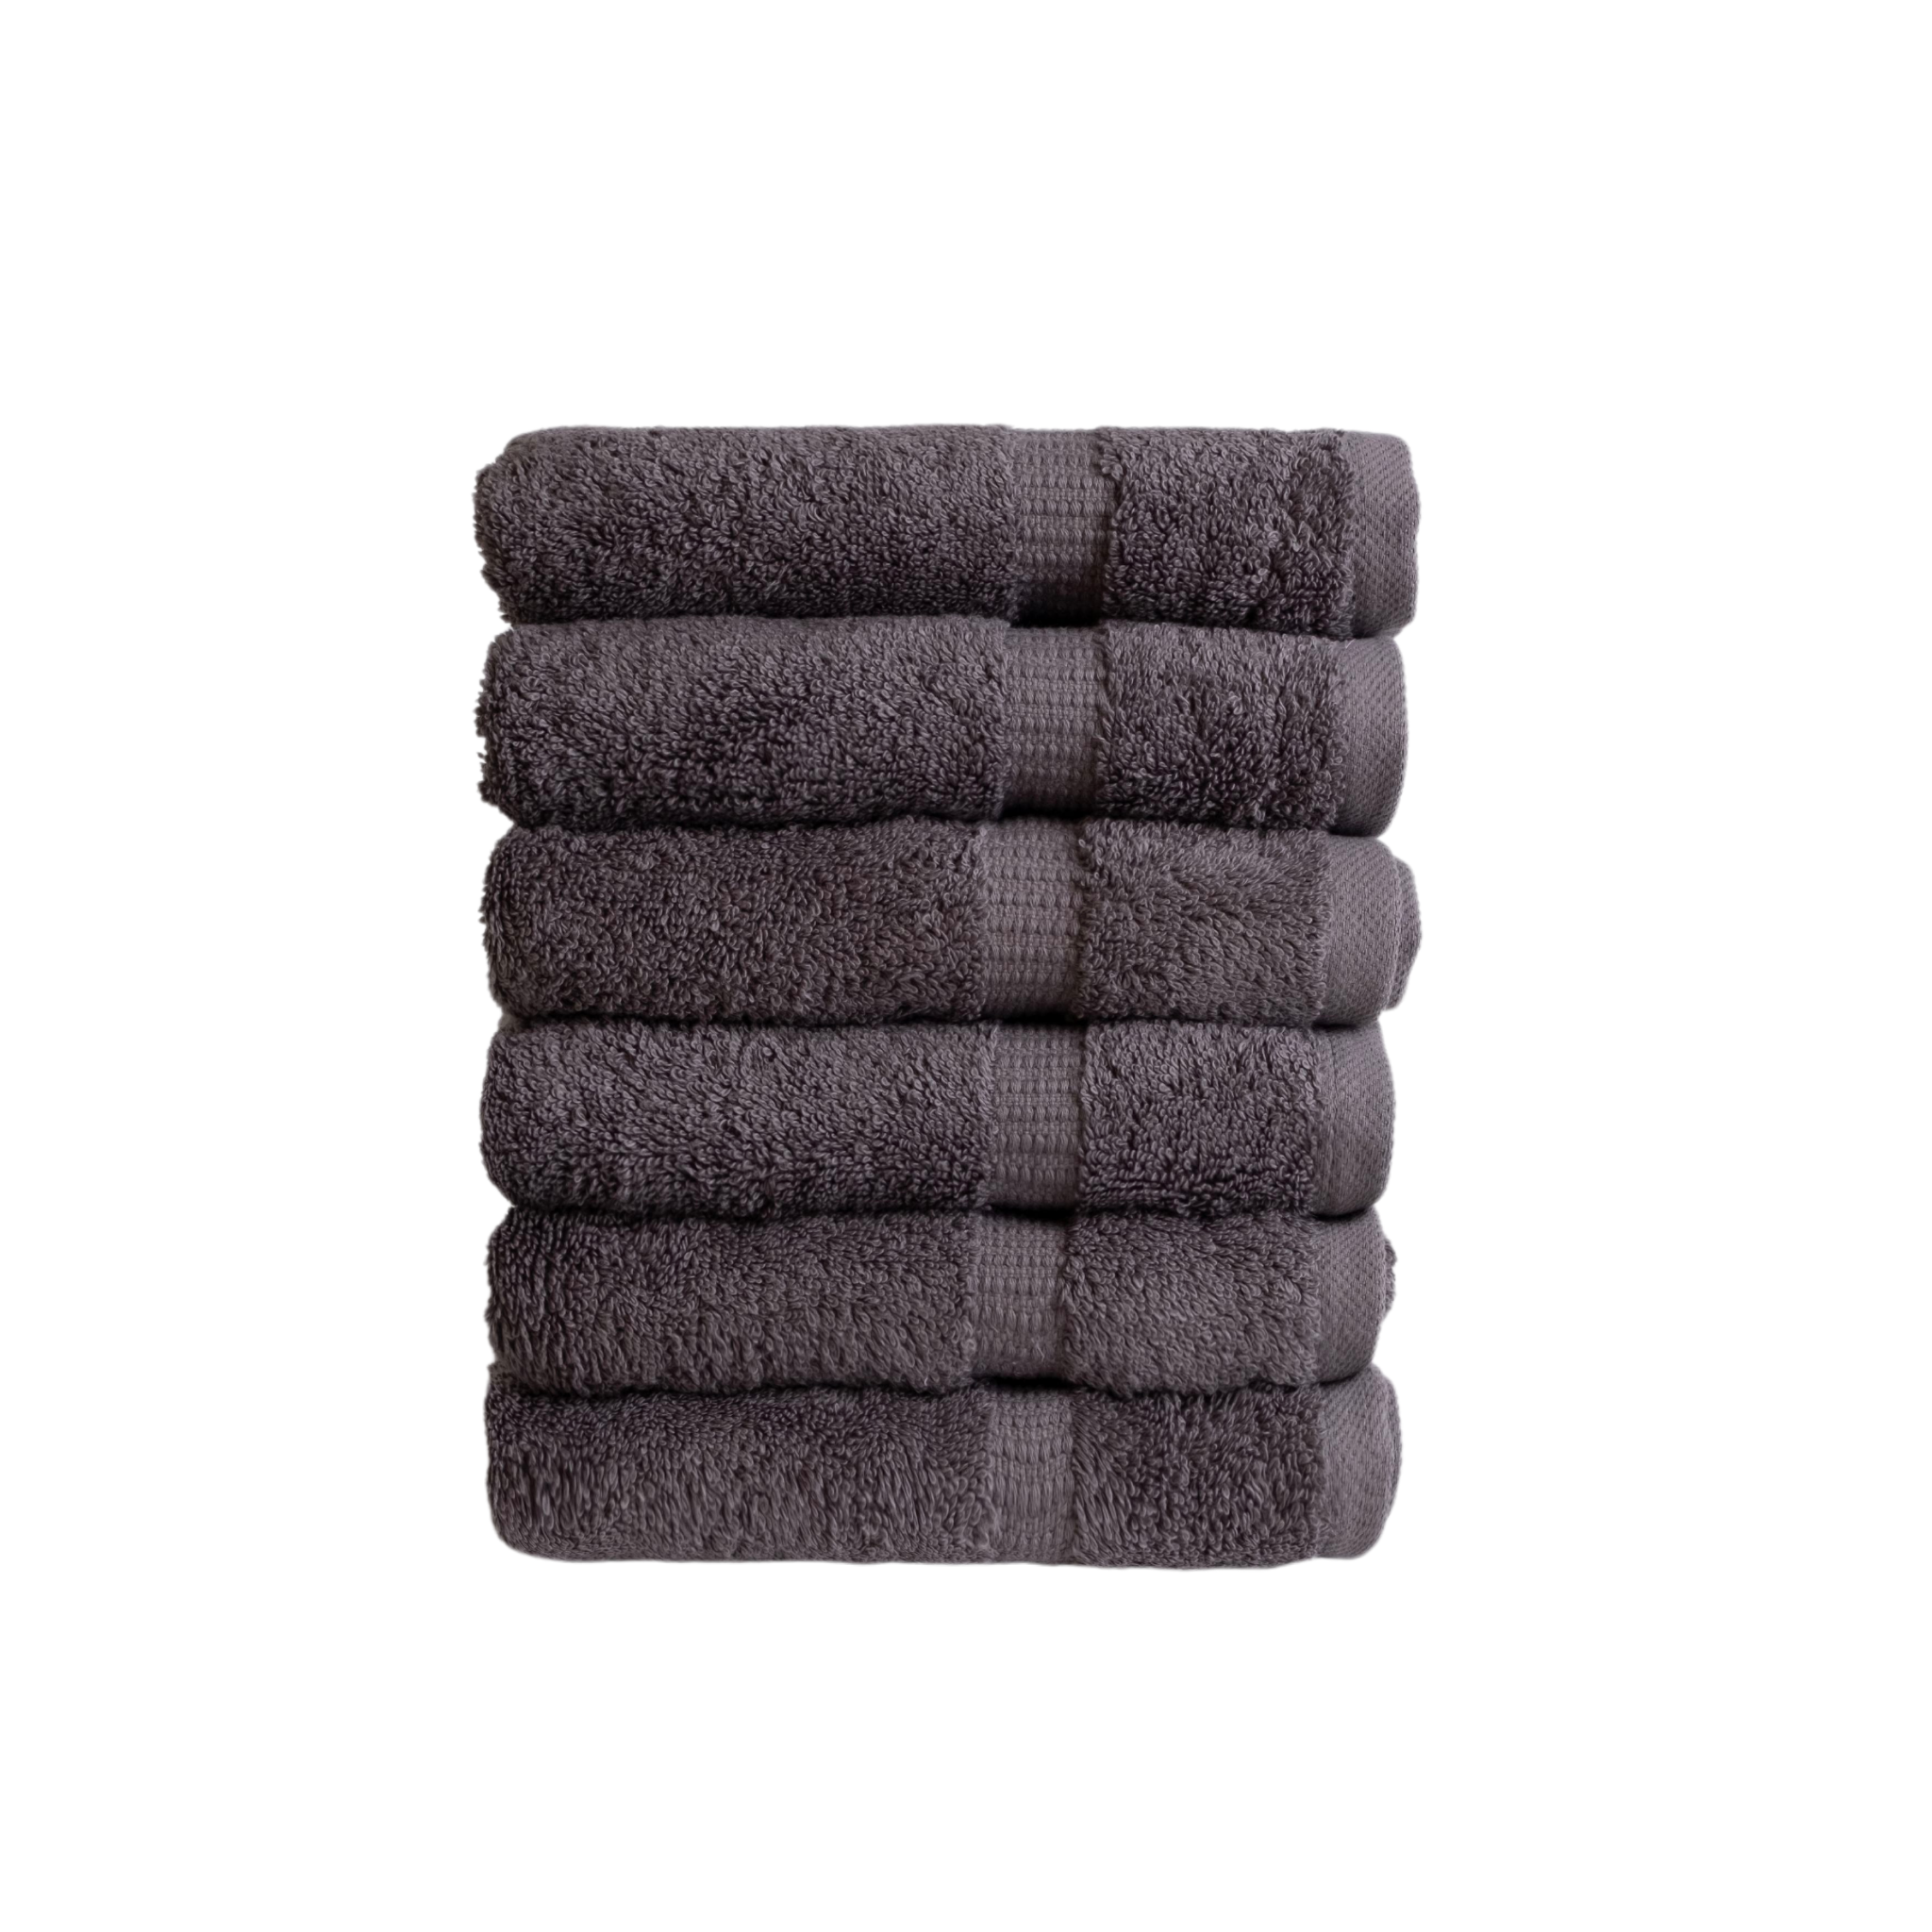 Salbakos Cambridge Hand Towel (6-Pack)